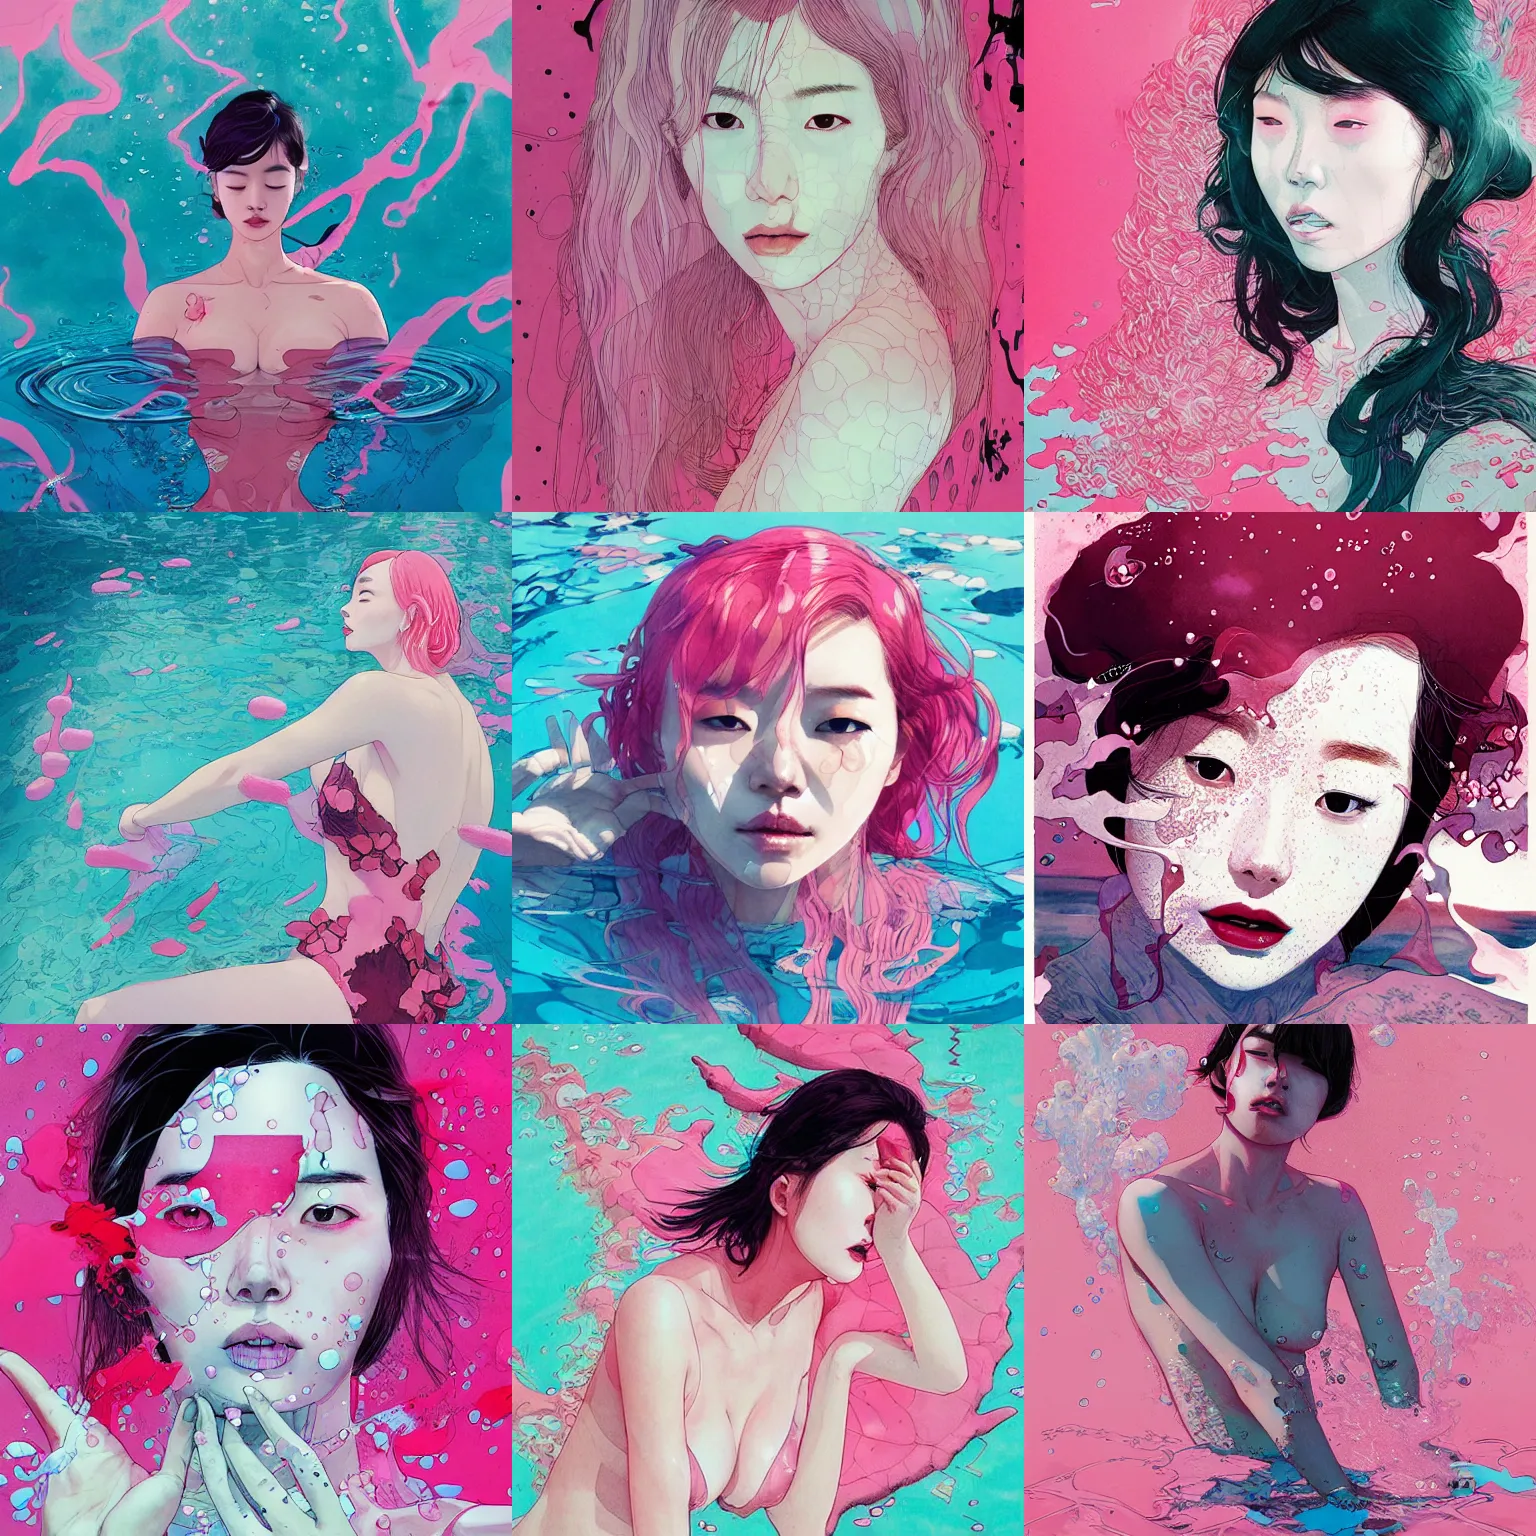 Prompt: lee jin - eun submerged in pink pool by conrad roset, m. k. kaluta, james jean, martine johanna, rule of thirds, seductive look, beautiful